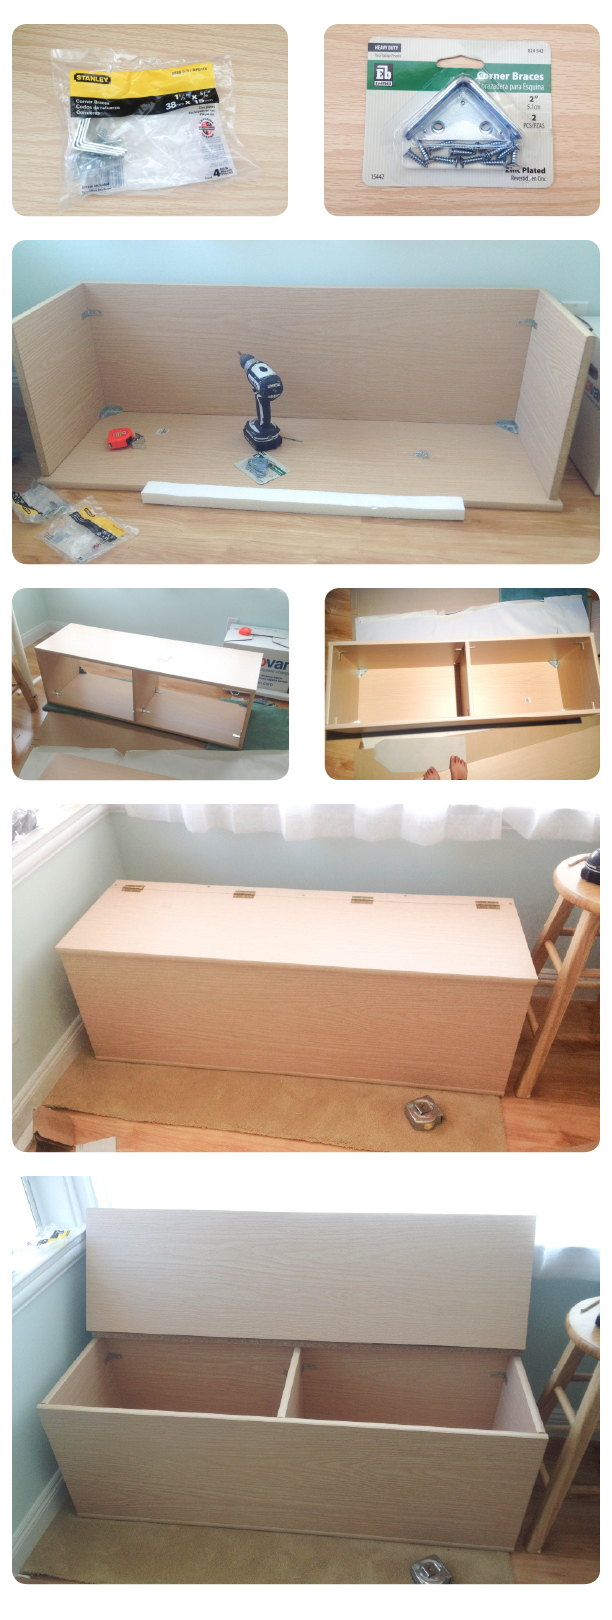 Build Storage Cabinet Plans Free DIY PDF how to build wood handrails